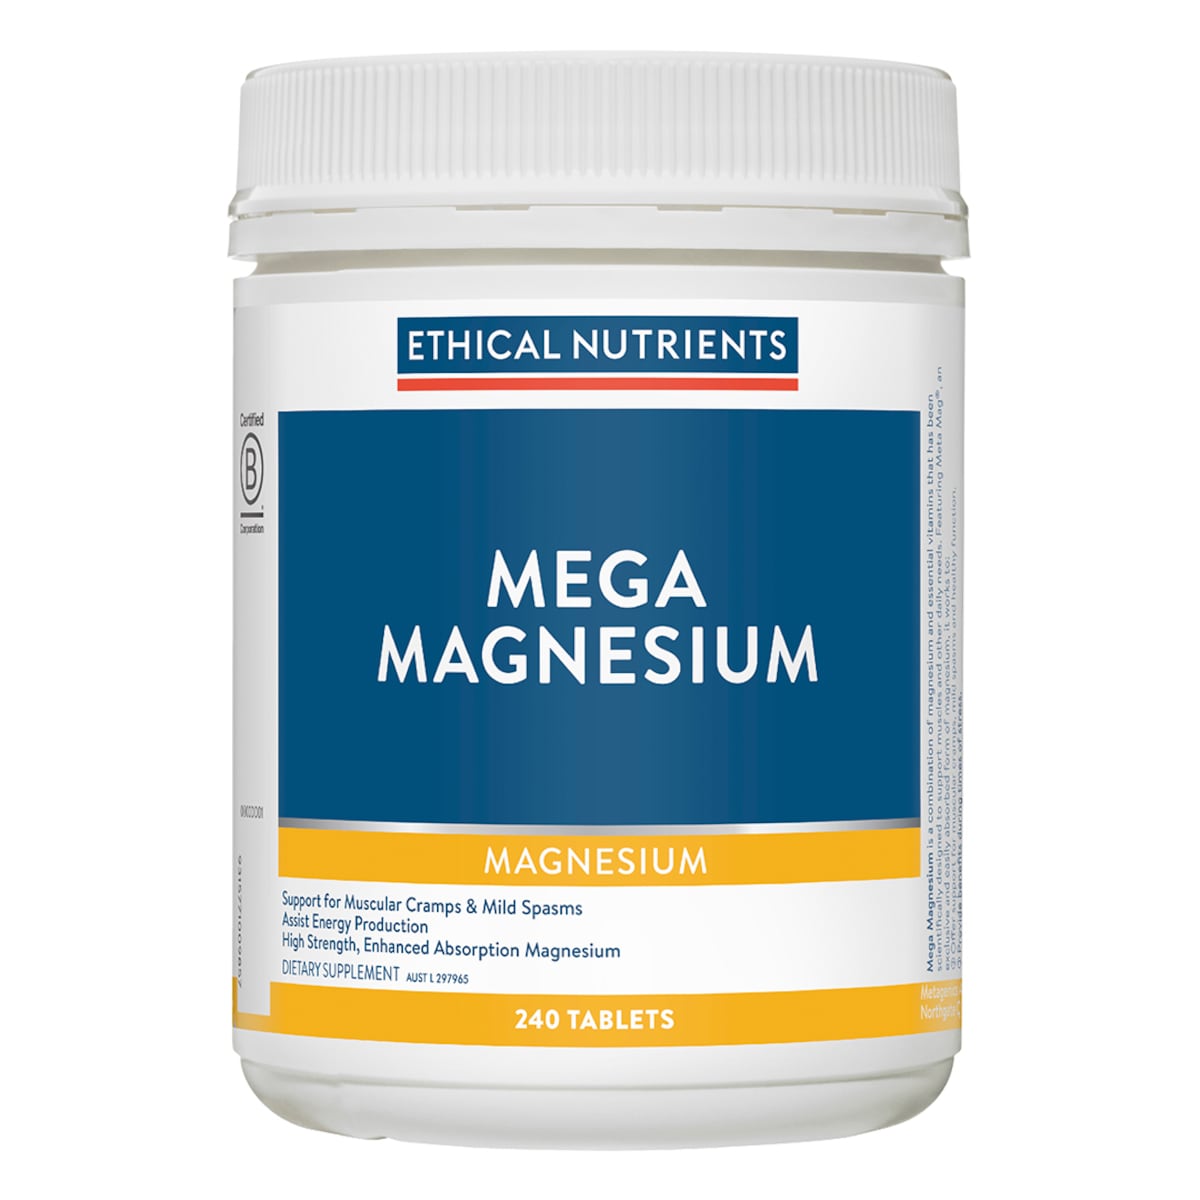 Ethical Nutrients Mega Magnesium 240 Tablets Australia